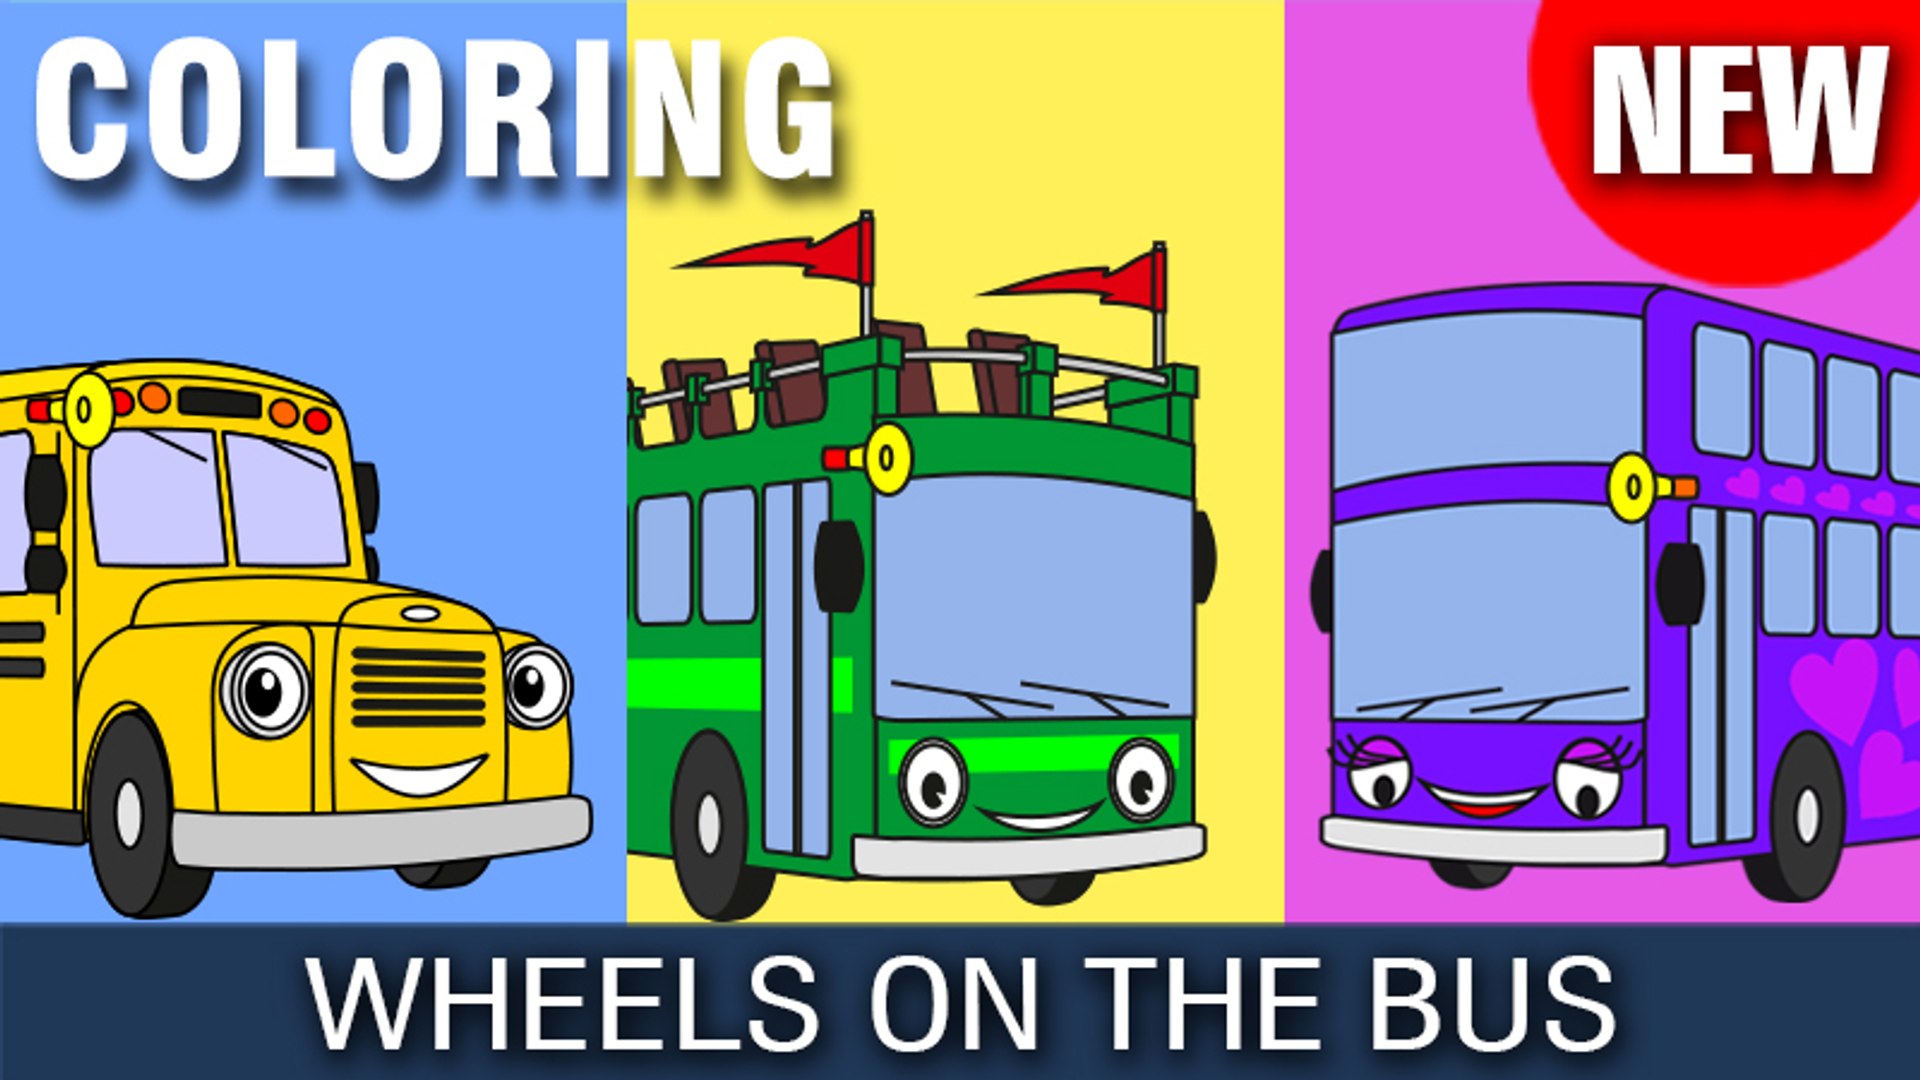 Wheels On The Bus   Nursery Rhymes   Coloring   baby songs   HD Version  from Ro Ri Ro